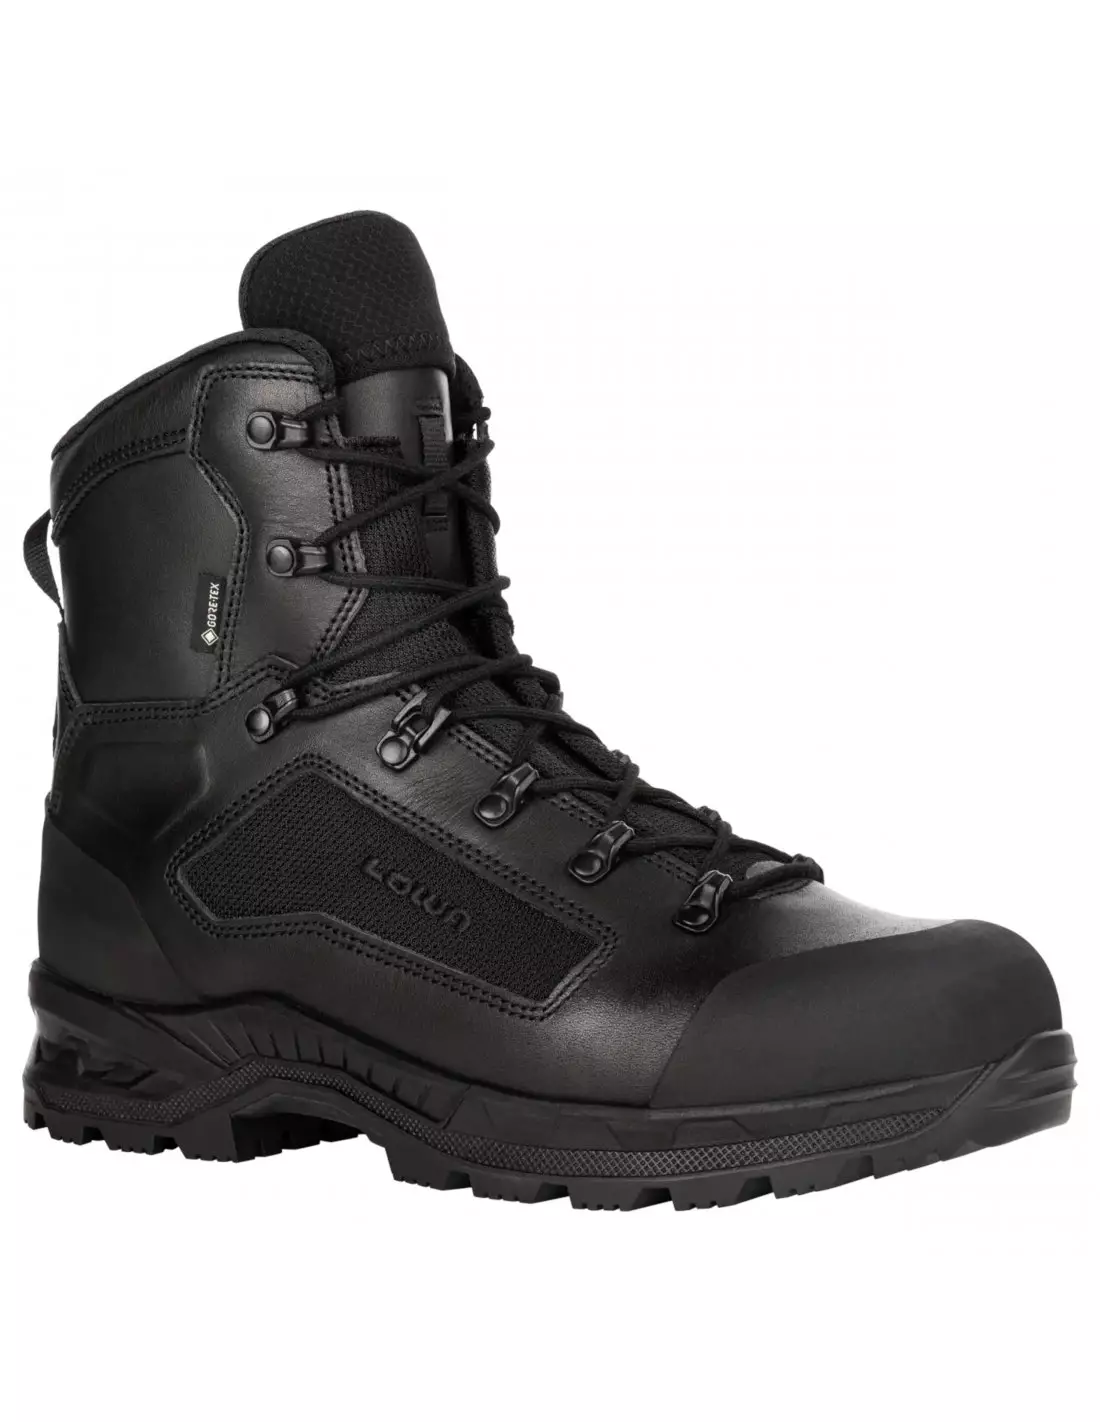 LOWA® BREACHER GTX MID Tactical Boots - Black